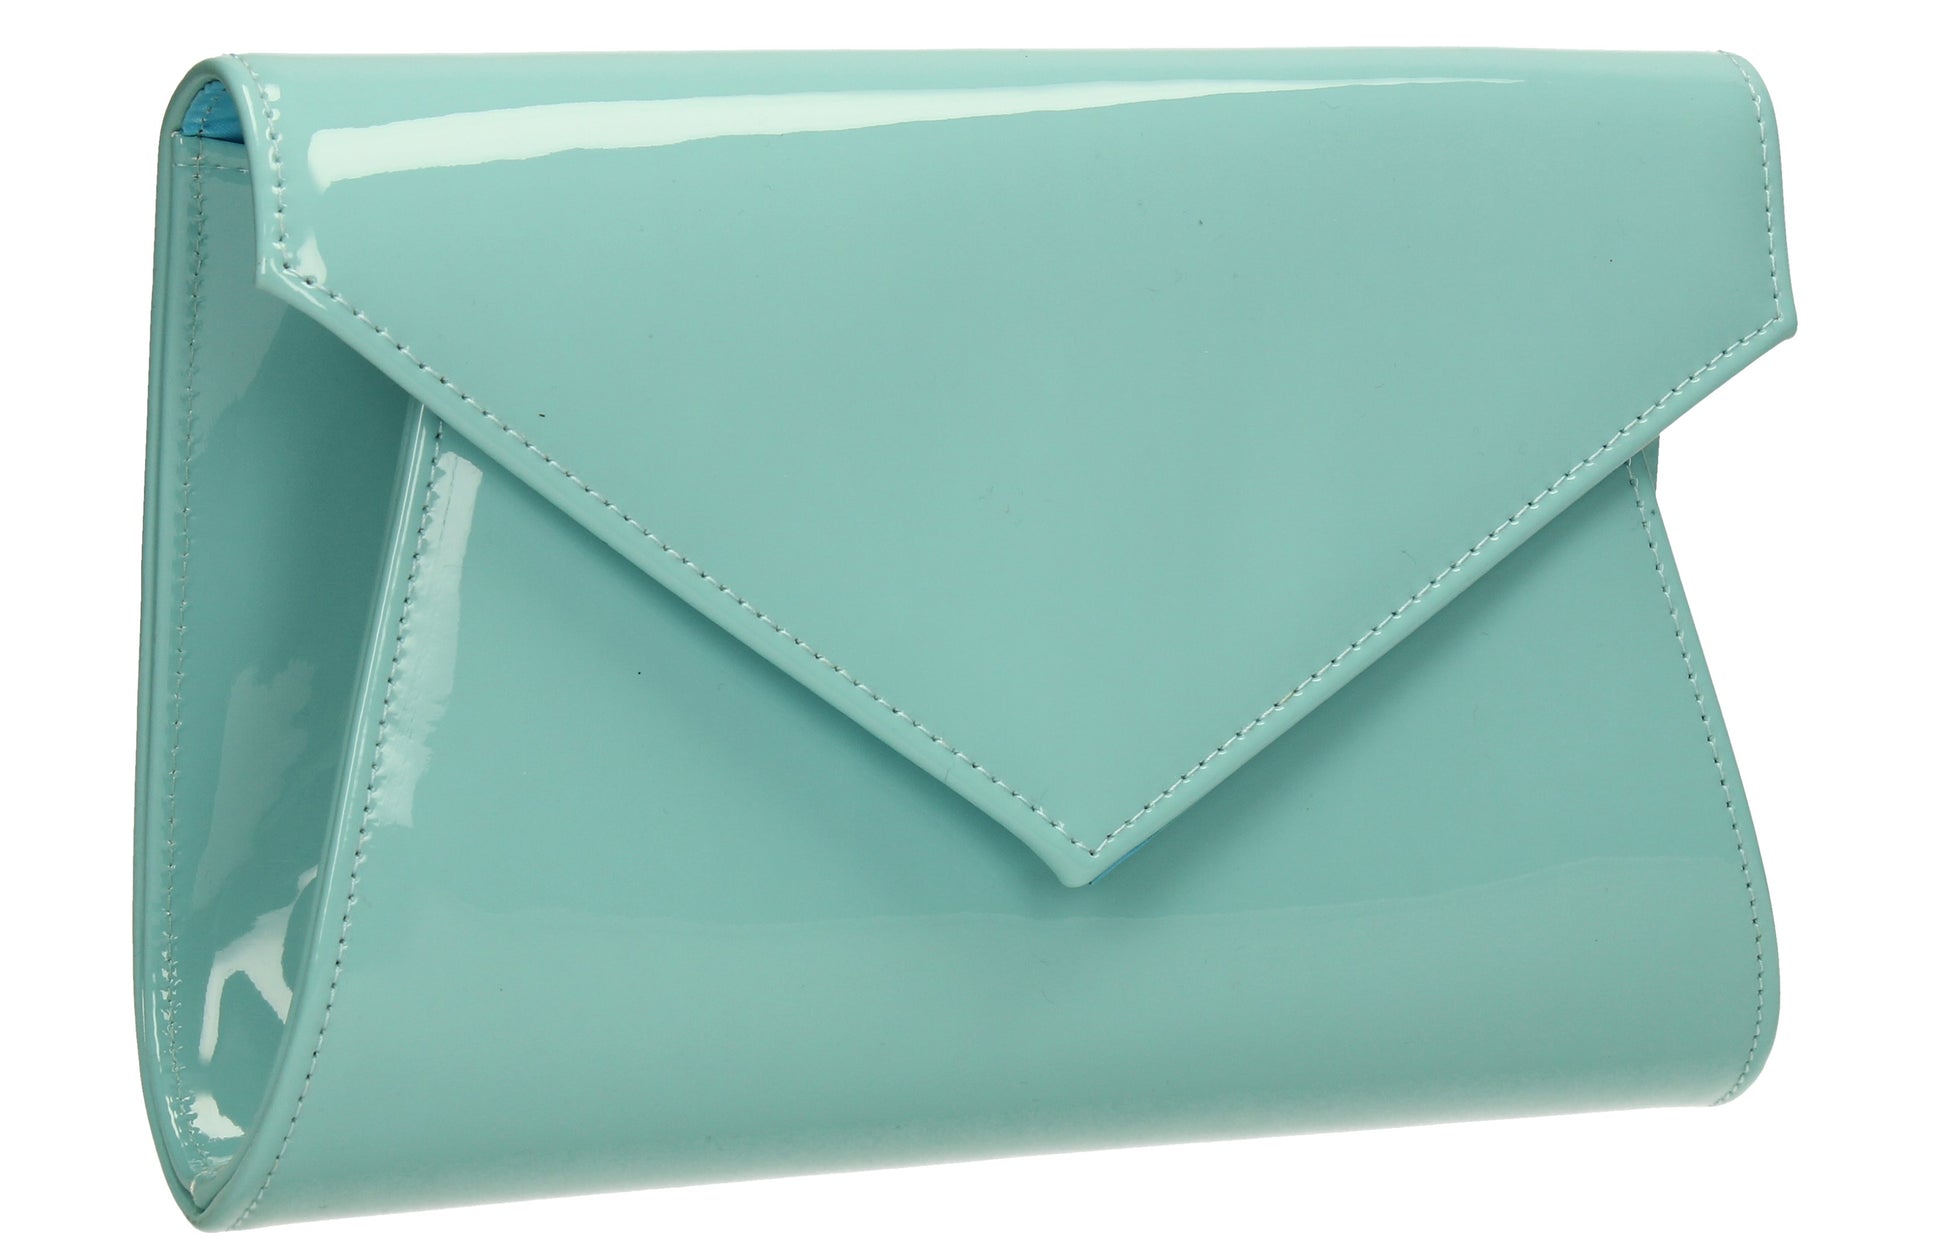 SWANKYSWANS Chrissy Envelope Clutch Bag Blue Cute Cheap Clutch Bag For Weddings School and Work